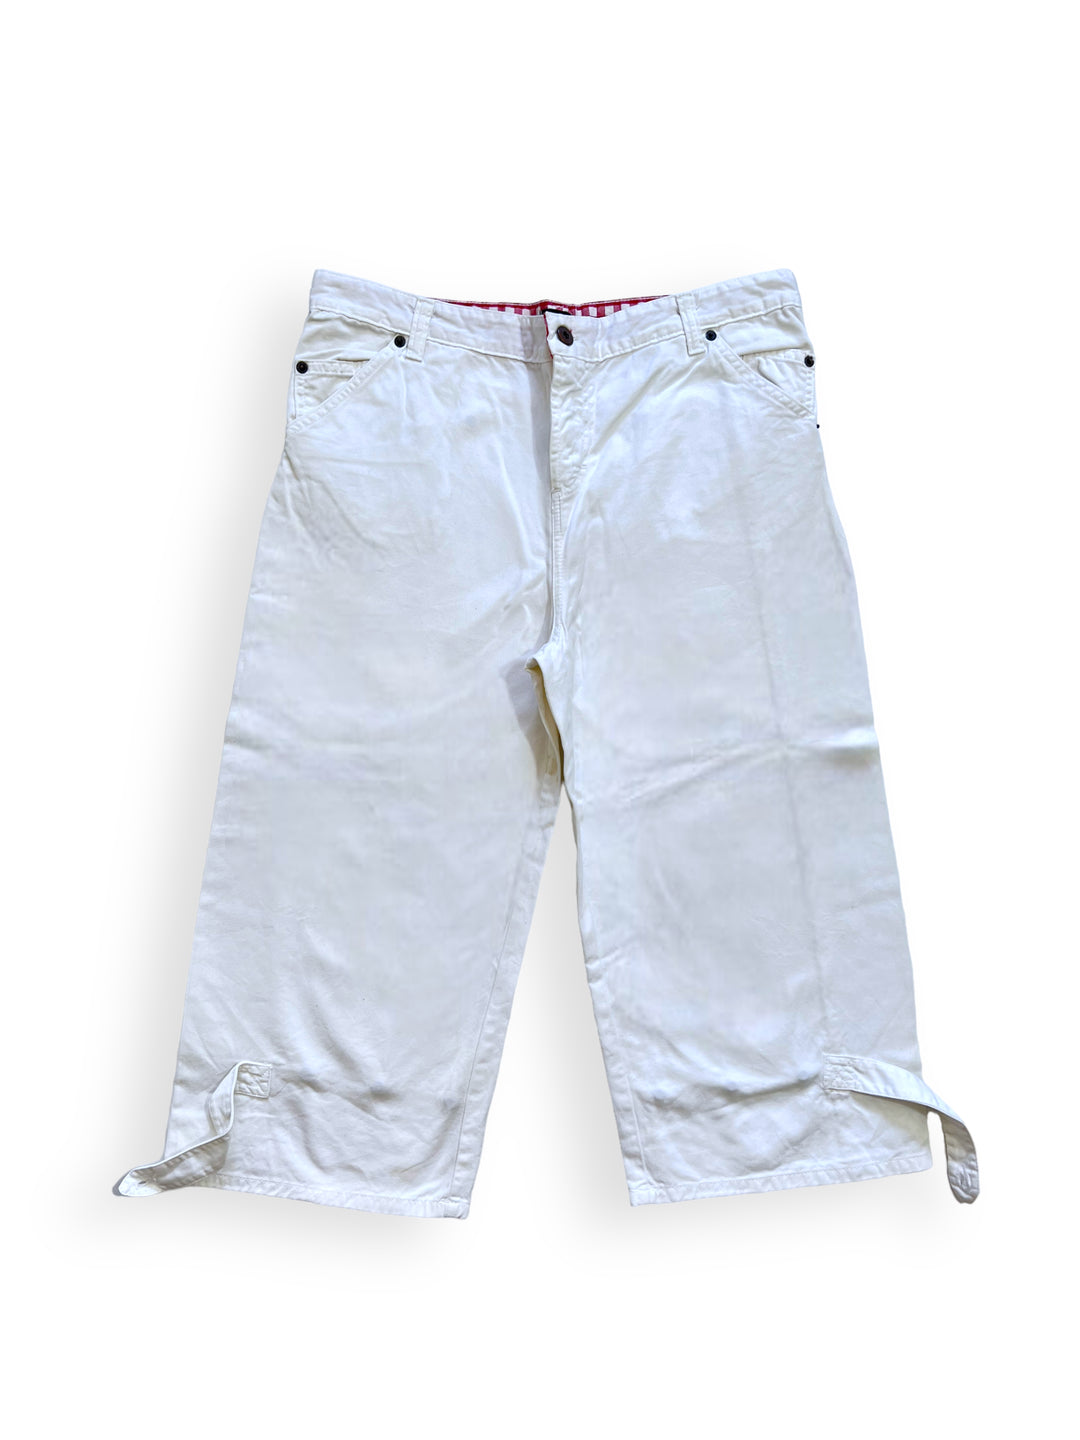 Y2K Dolce & Gabbana Denim Shorts Men’s Medium